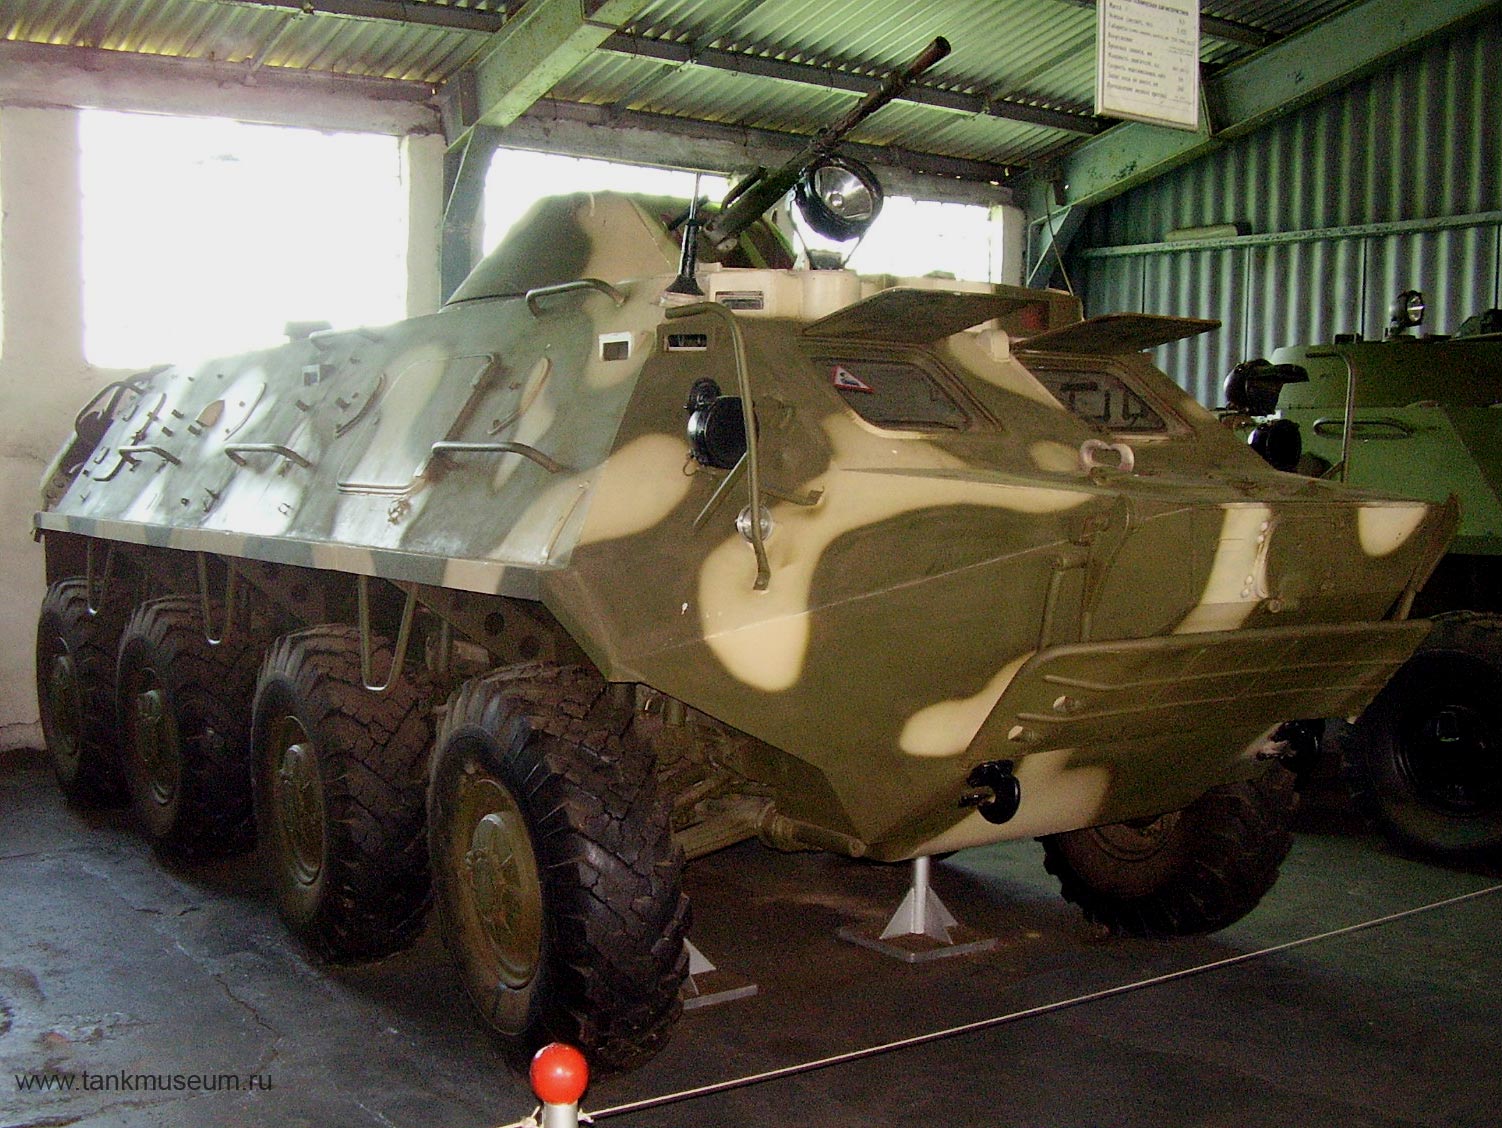 Kubinka tank museum, Amphibious armored personnel carrier BTR-60PB